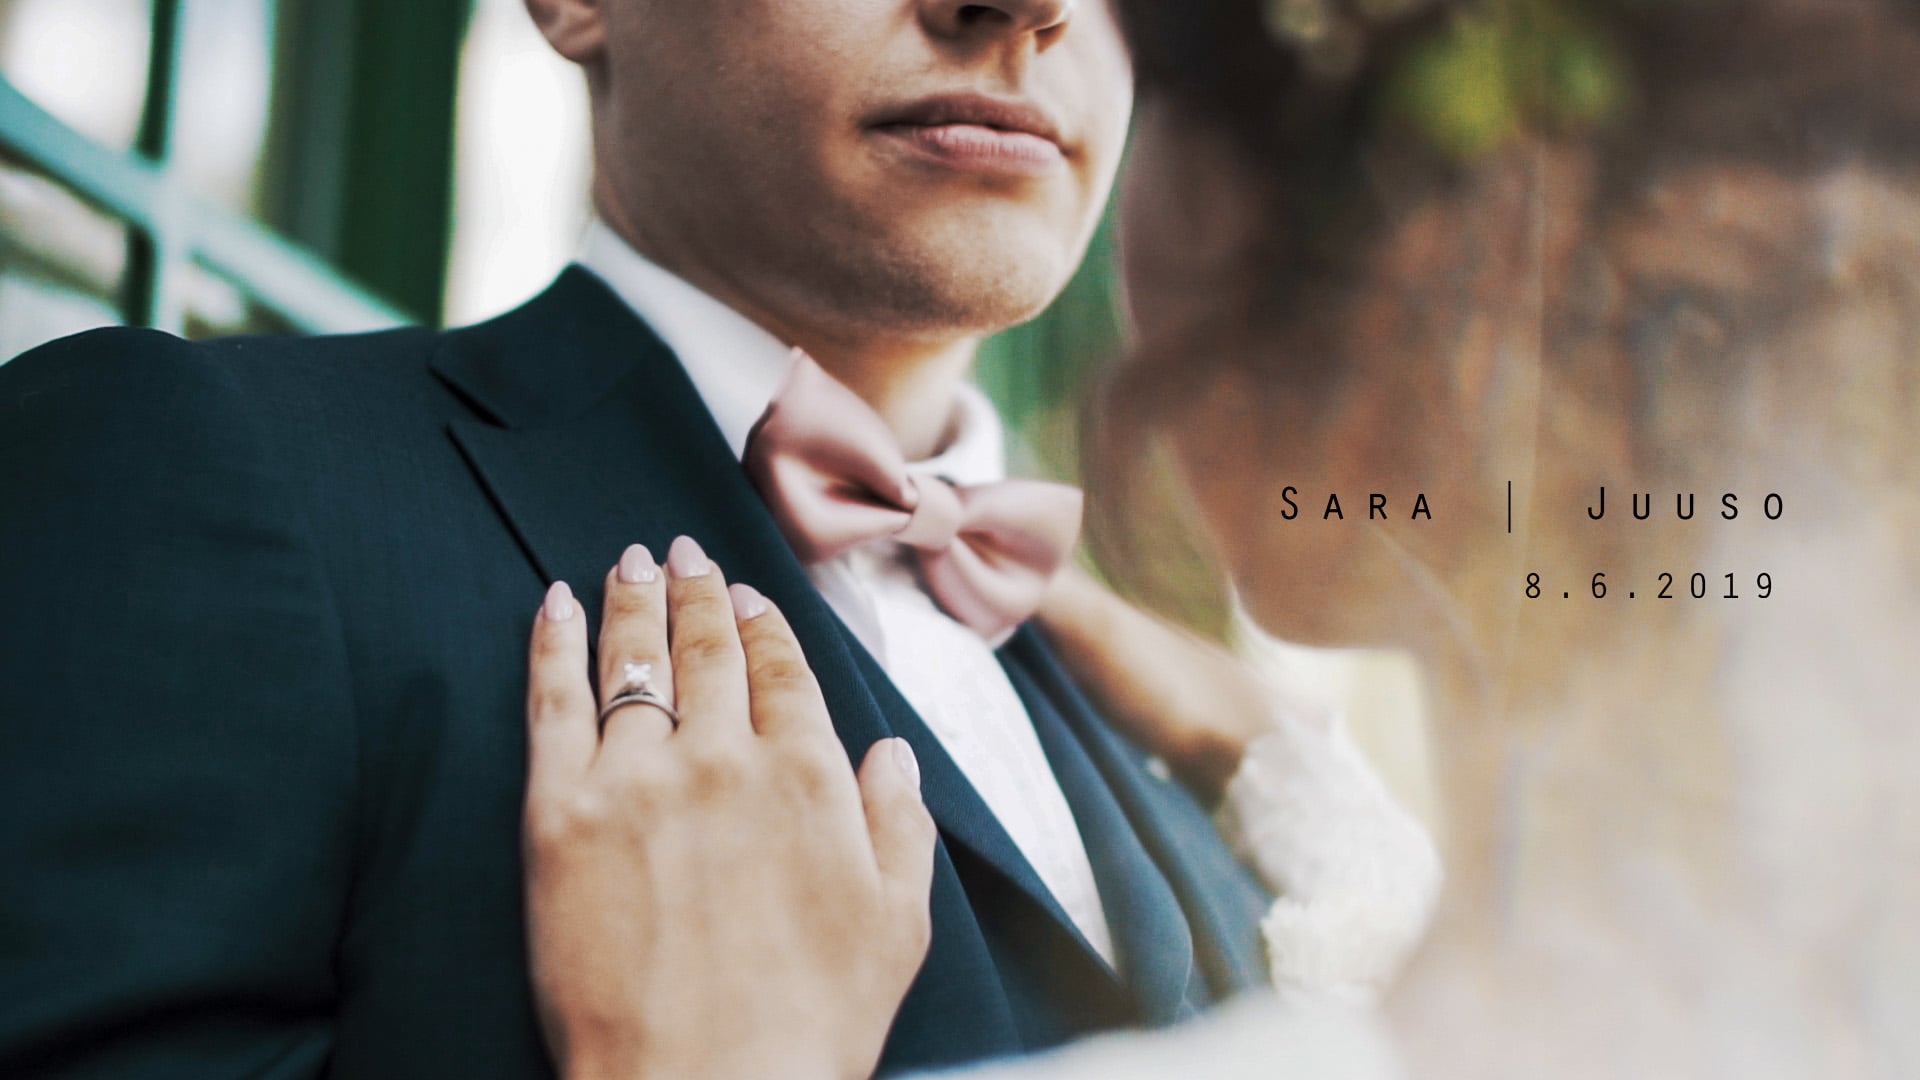 Sara & Juuso 2019 Wedding Highlights